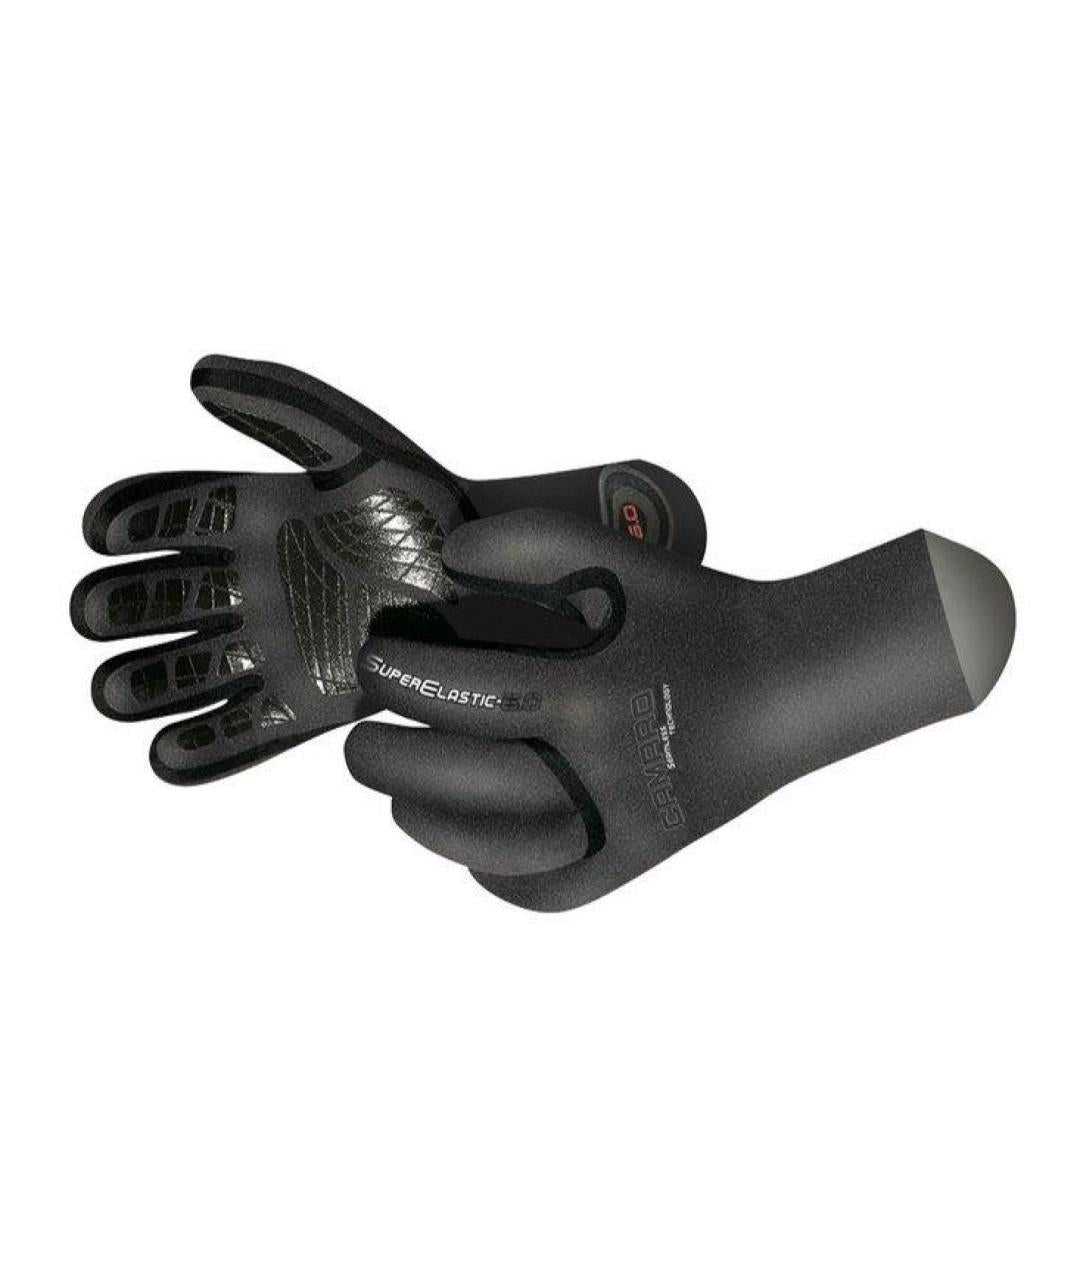 Seamless Camaro Gloves